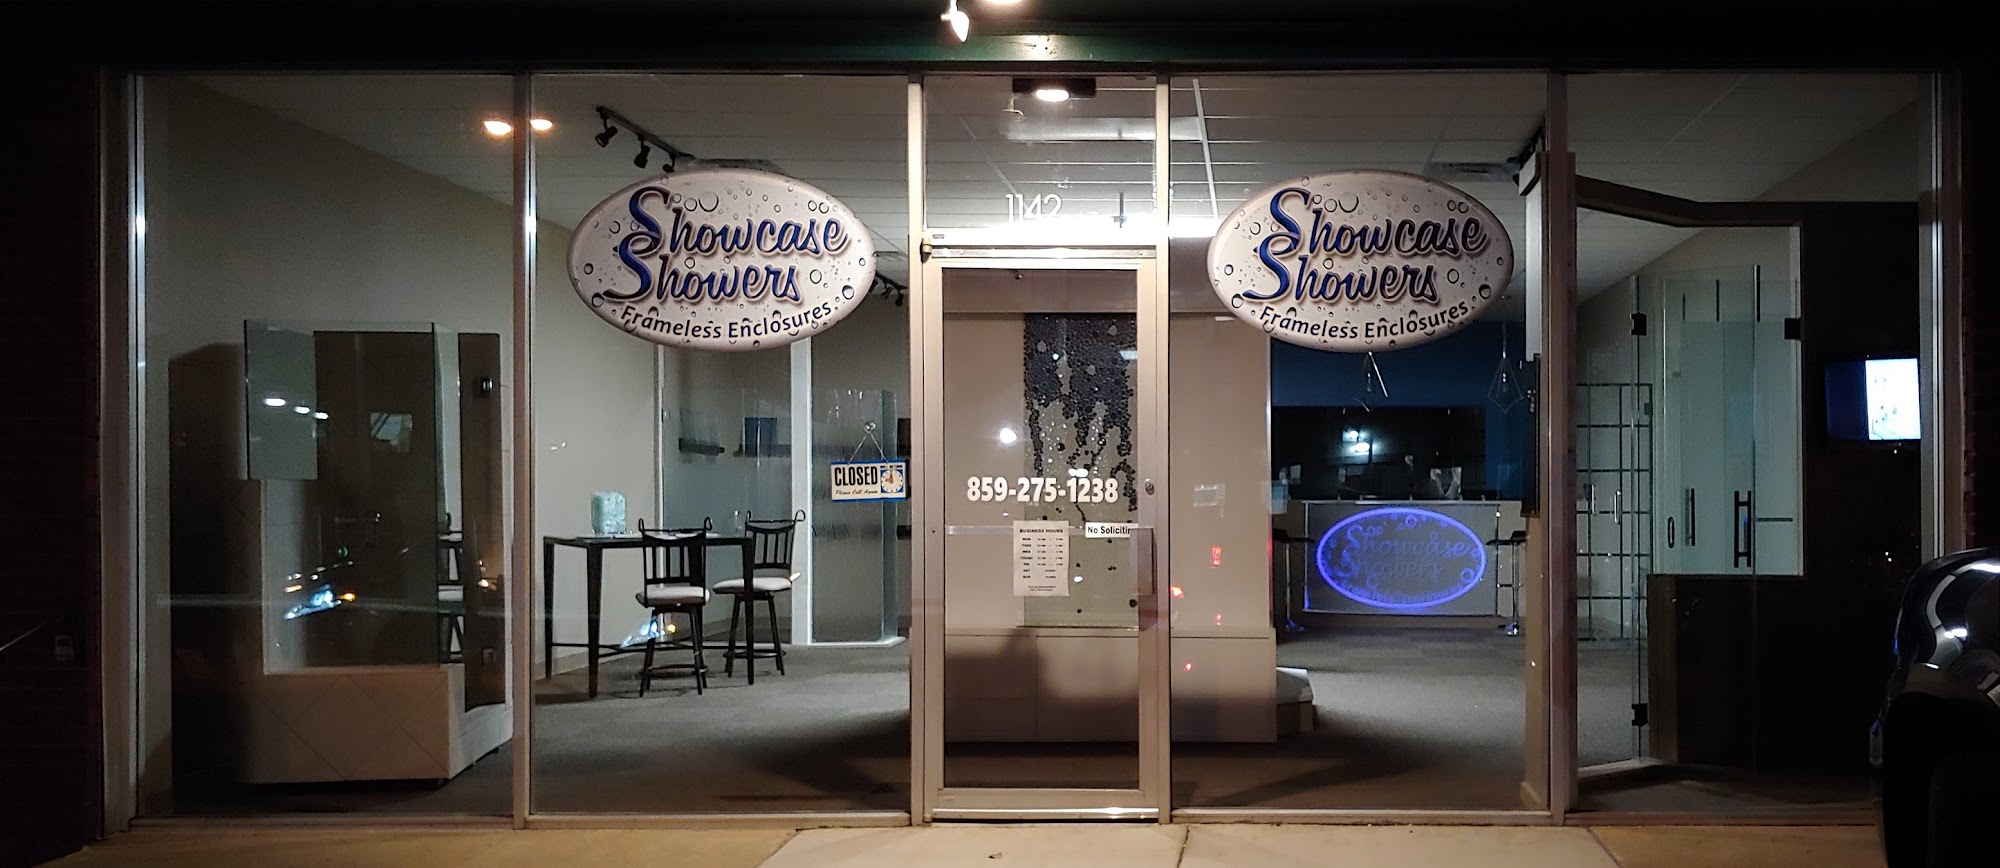 Showcase Showers Inc.